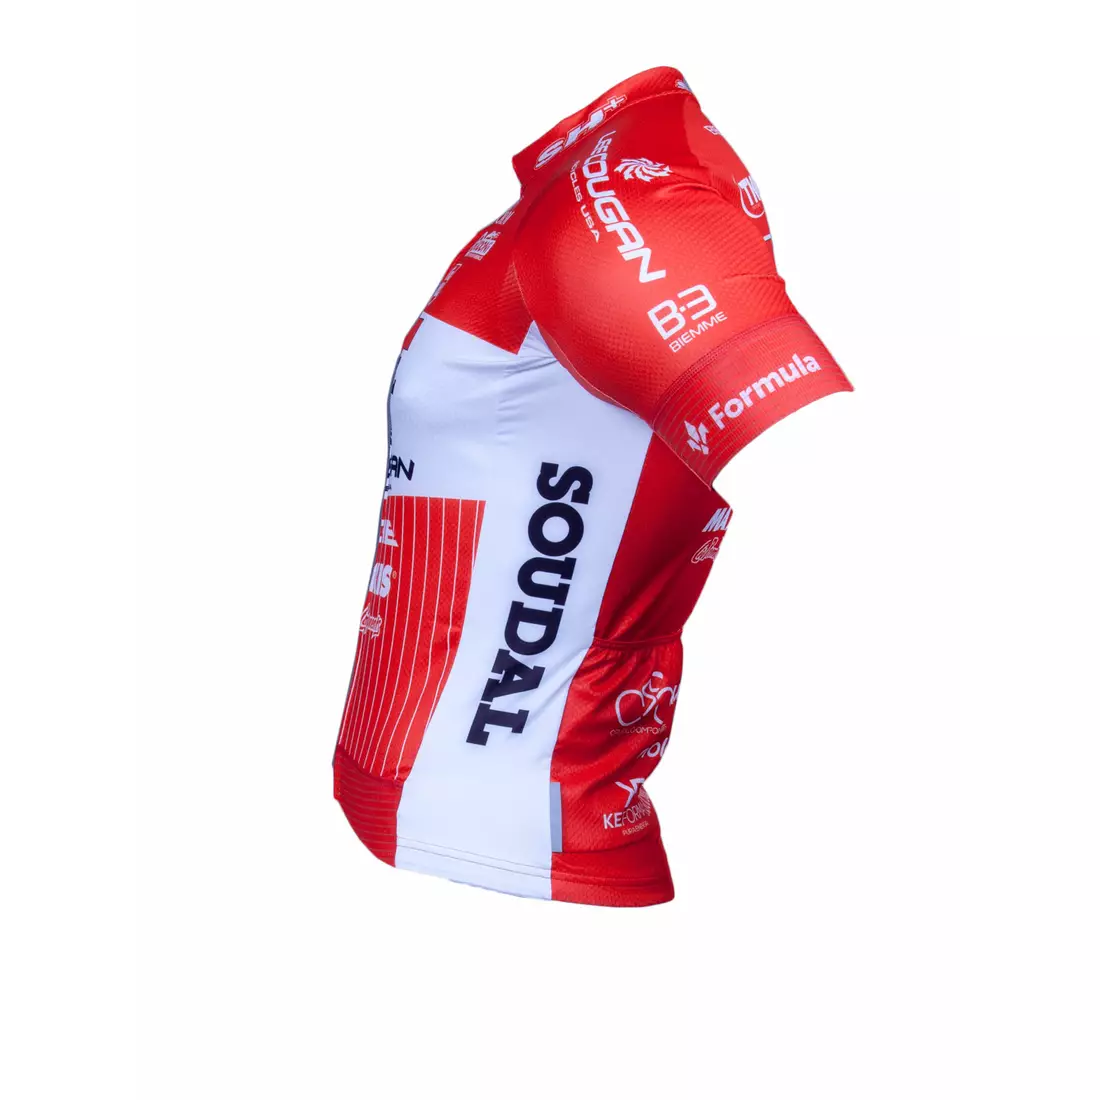 BIEMME SOUDAL-LEE COUGAN Racing Team 2017 - men's cycling jersey